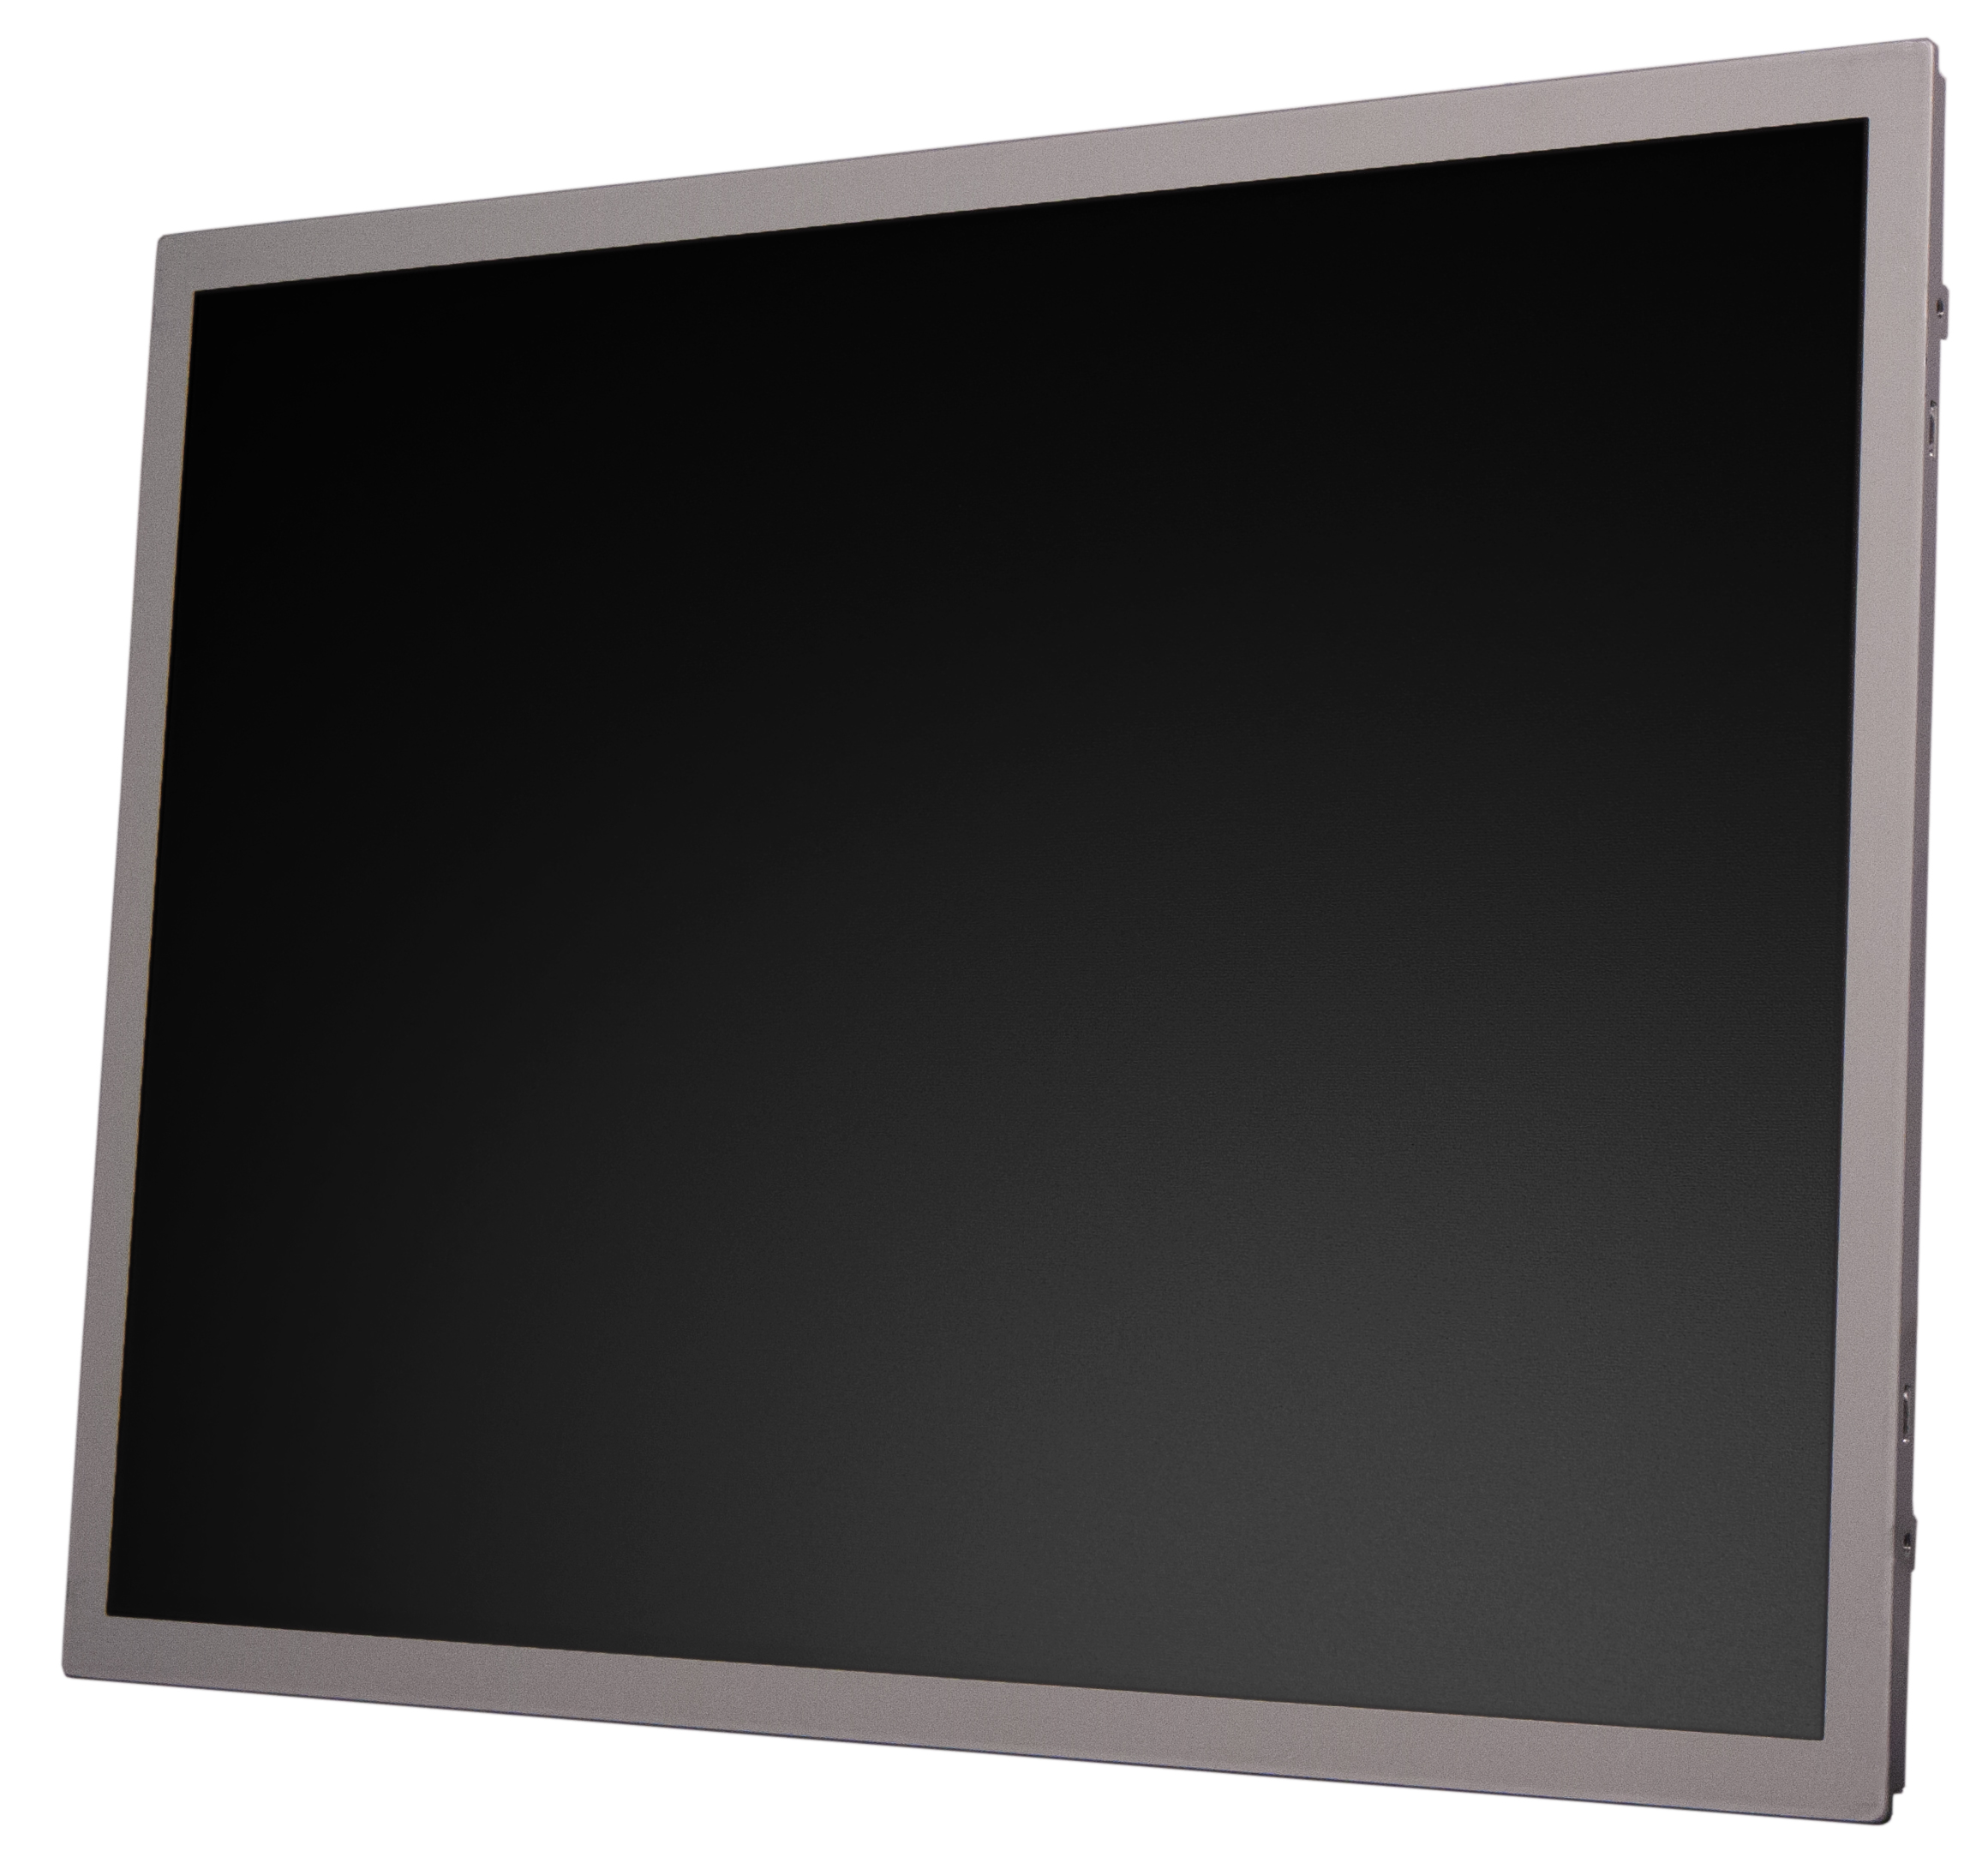 15-inch (diagonal) LQ150X1LG96 High Brightness LCD Module